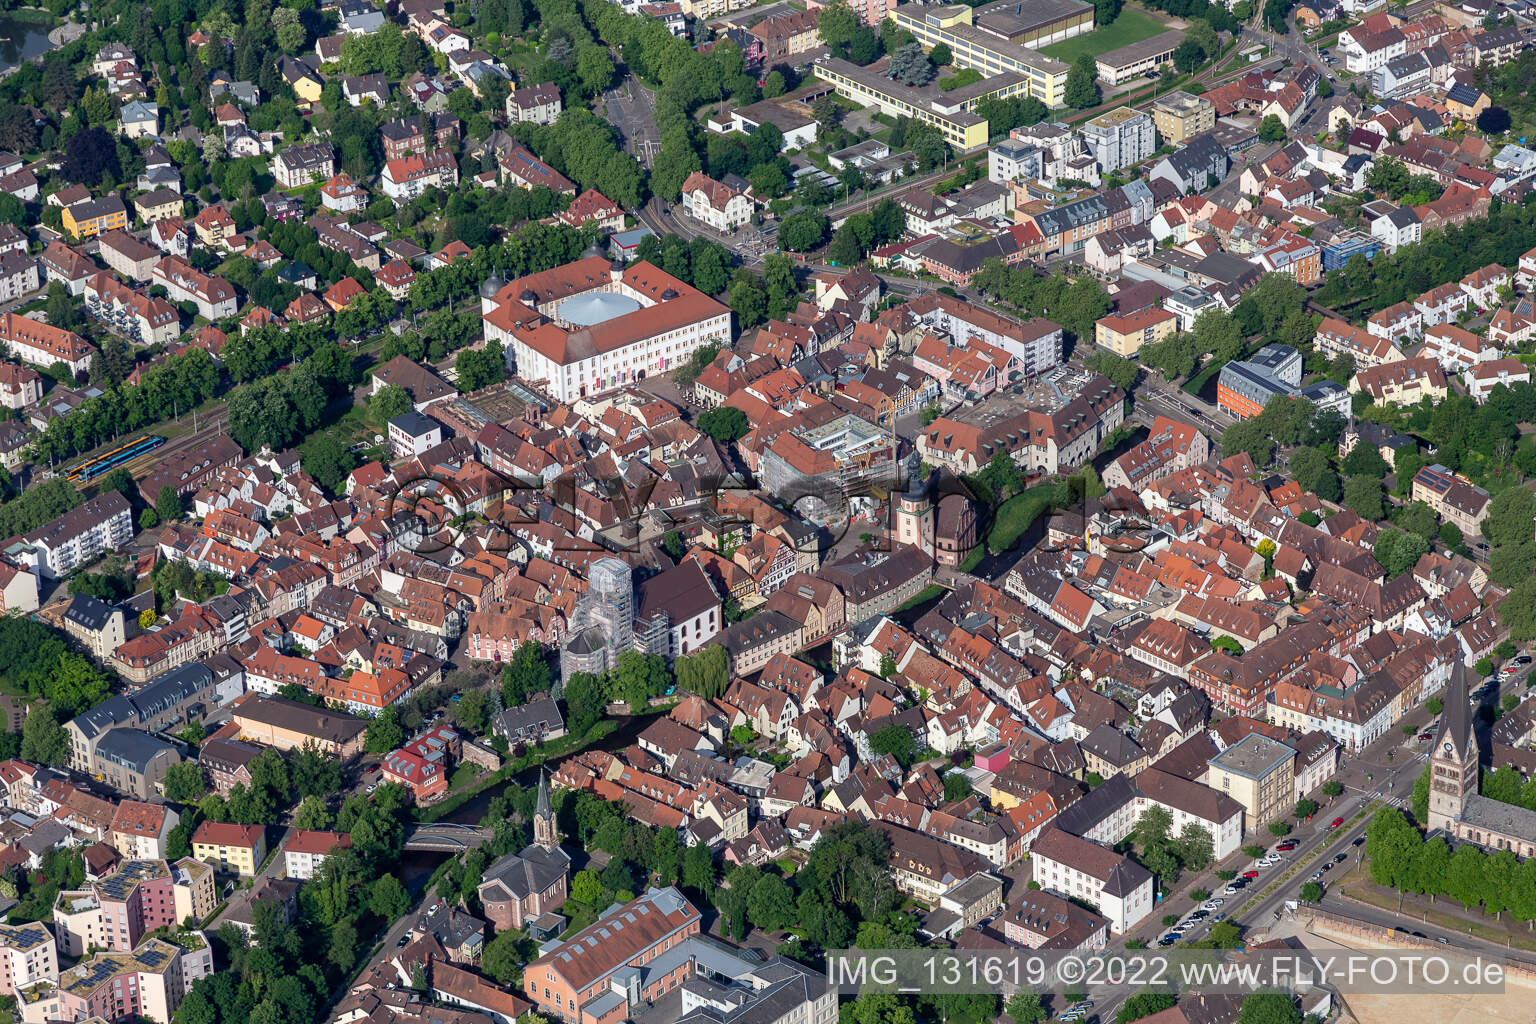 Historical old city in Ettlingen in the state Baden-Wuerttemberg, Germany